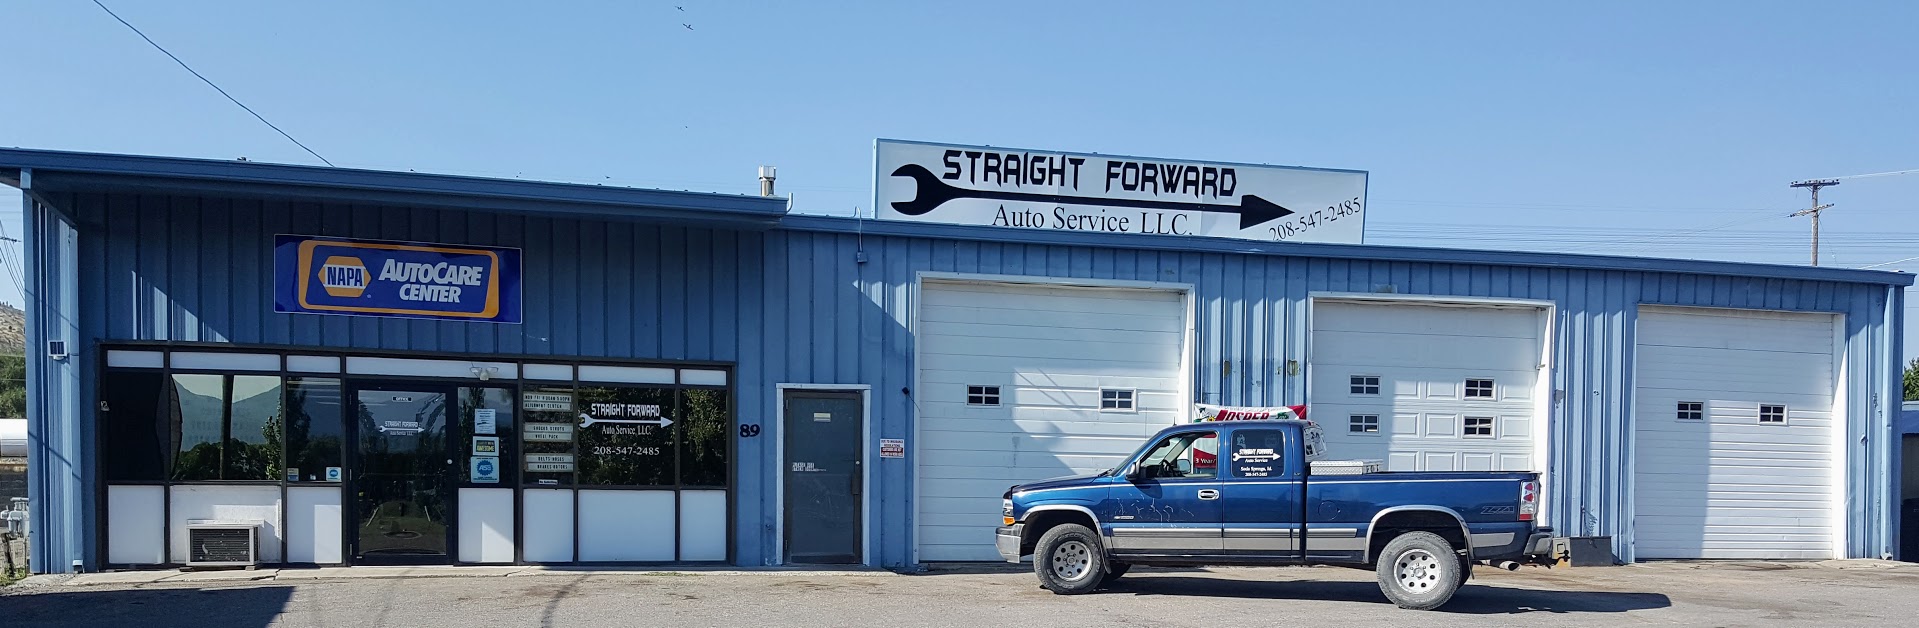 Straight Forward Auto Service LLC